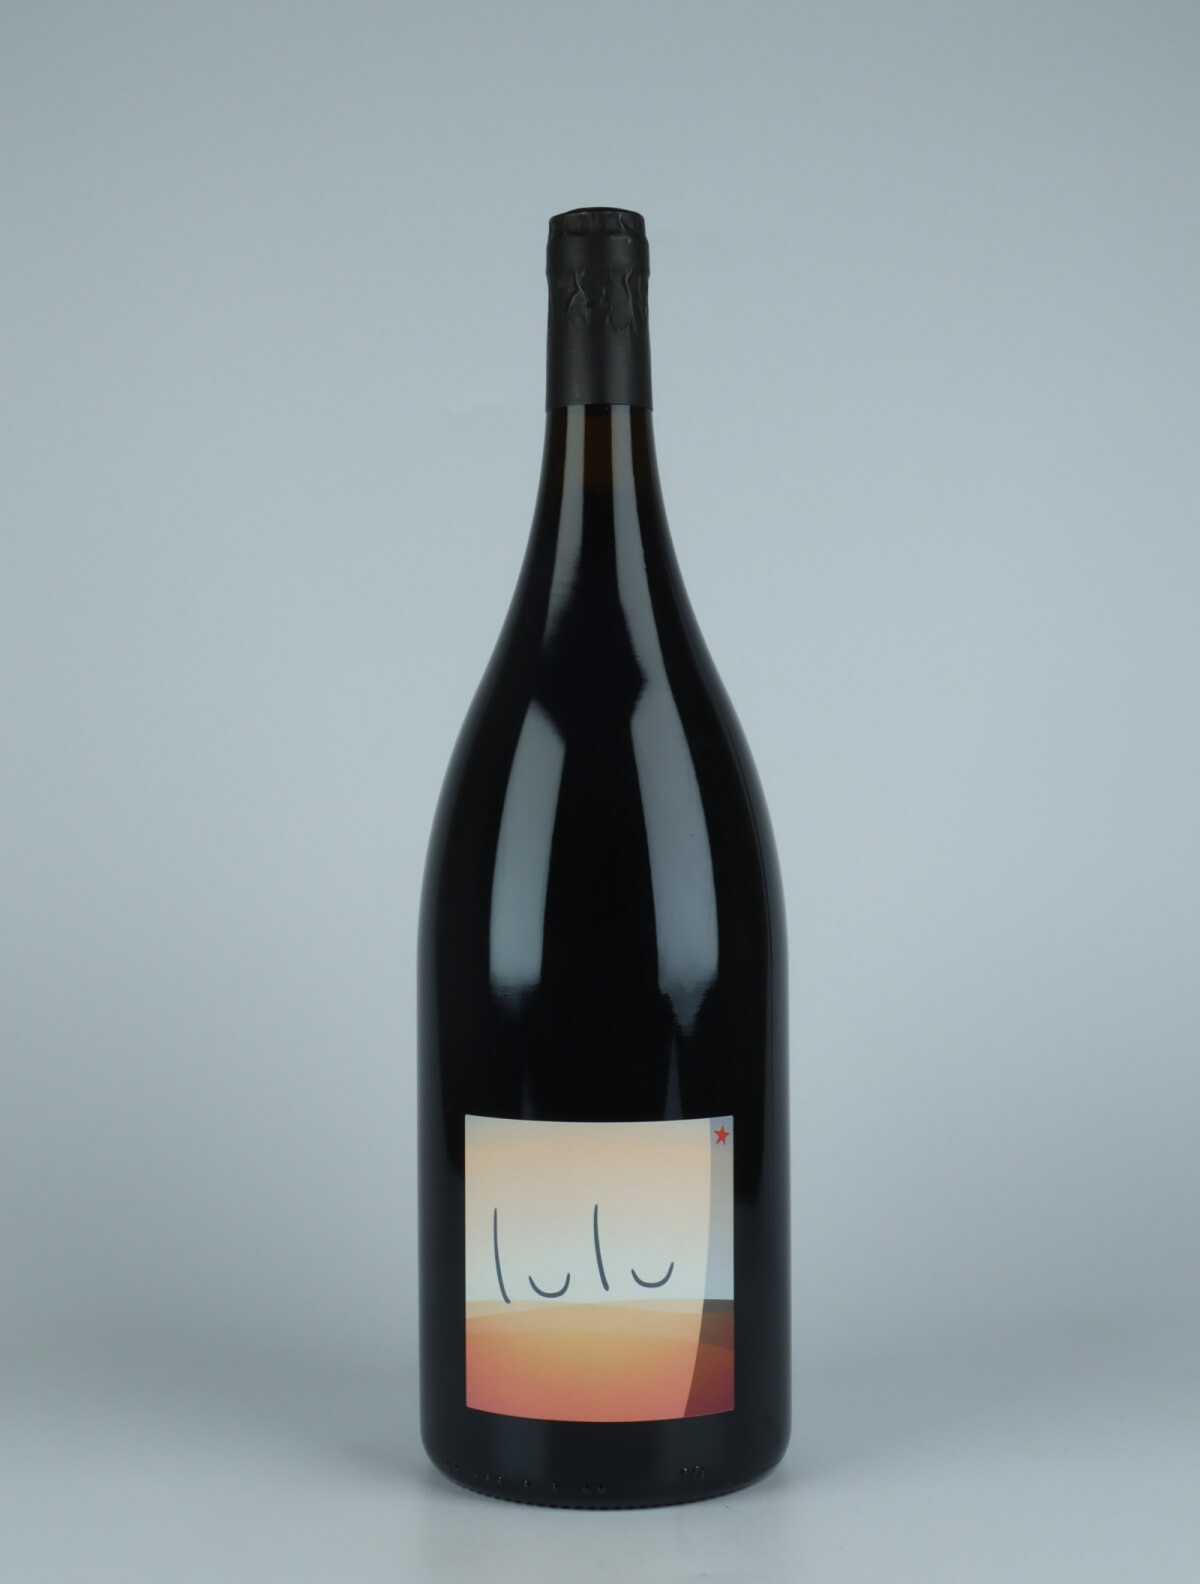 A bottle 2021 Lulu - Magnum Red wine from Patrick Bouju, Auvergne in France